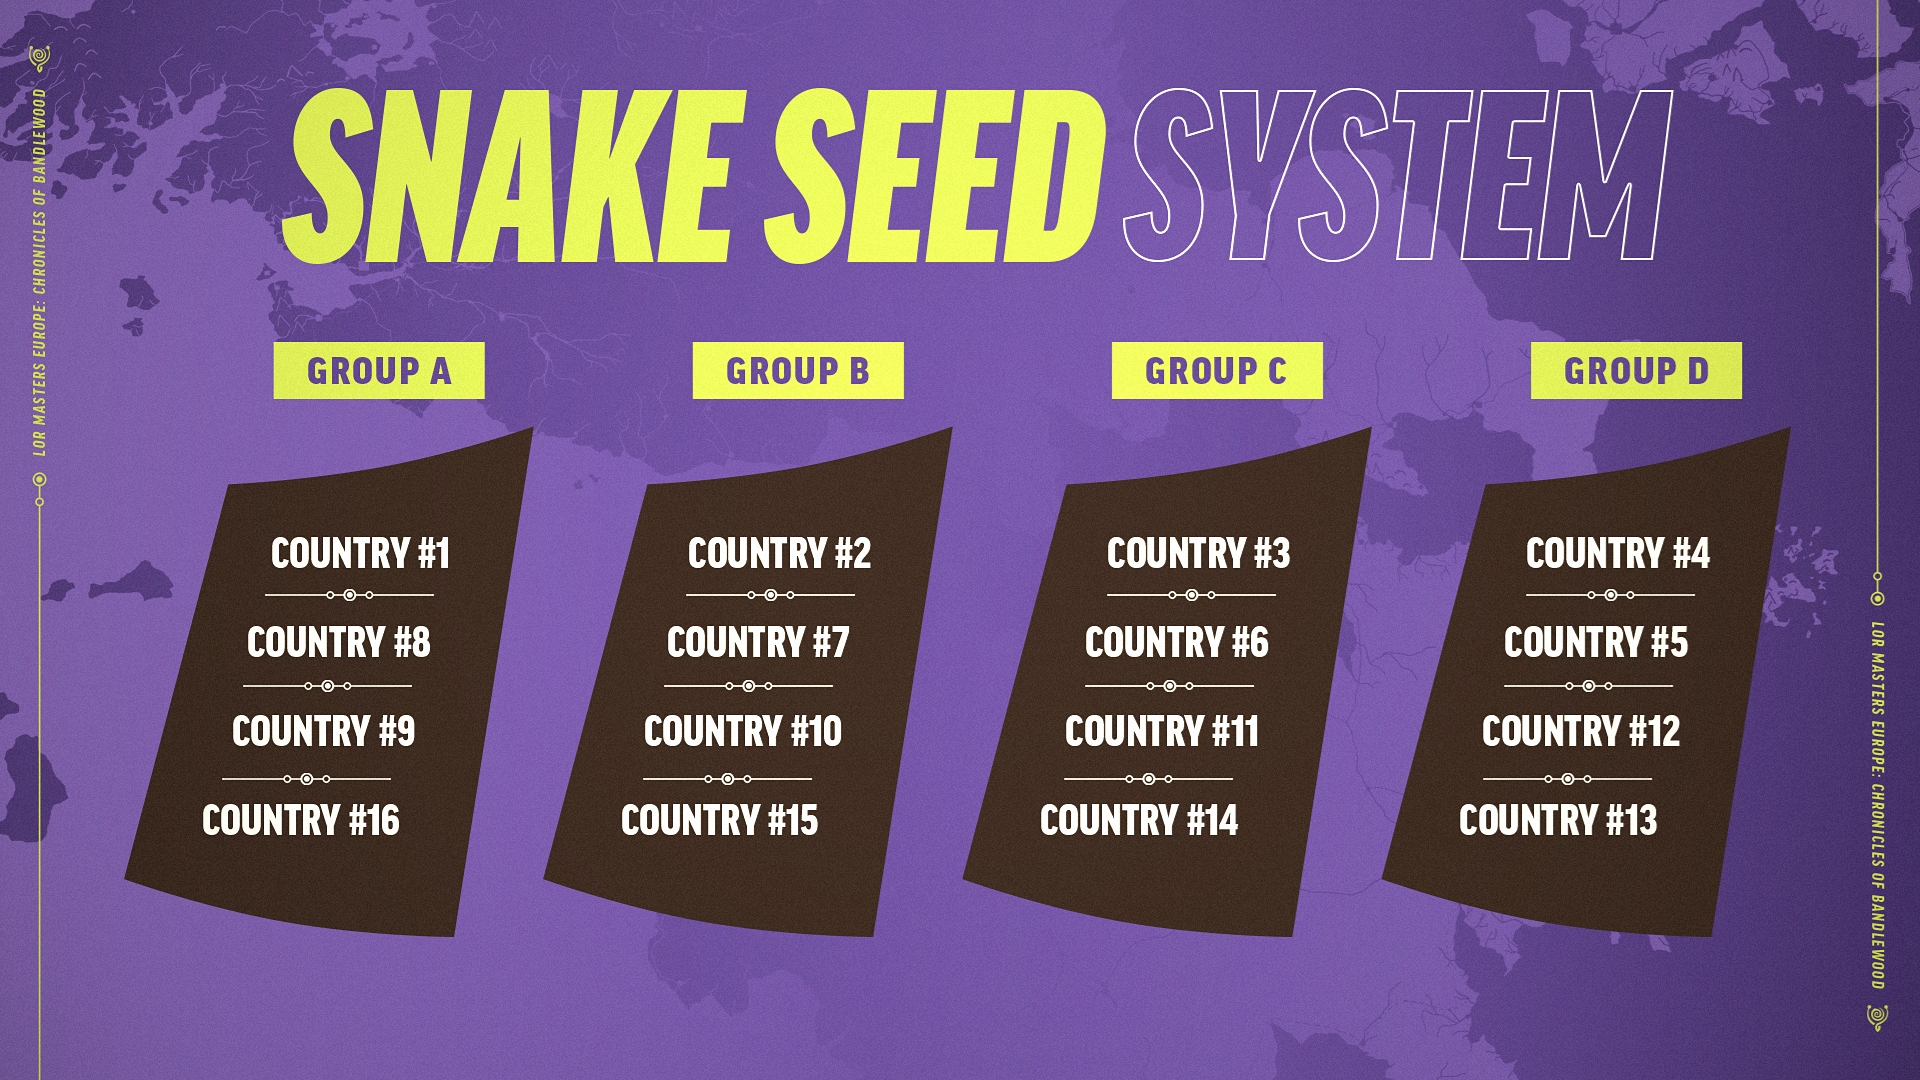 Snake_seed_system.jpg